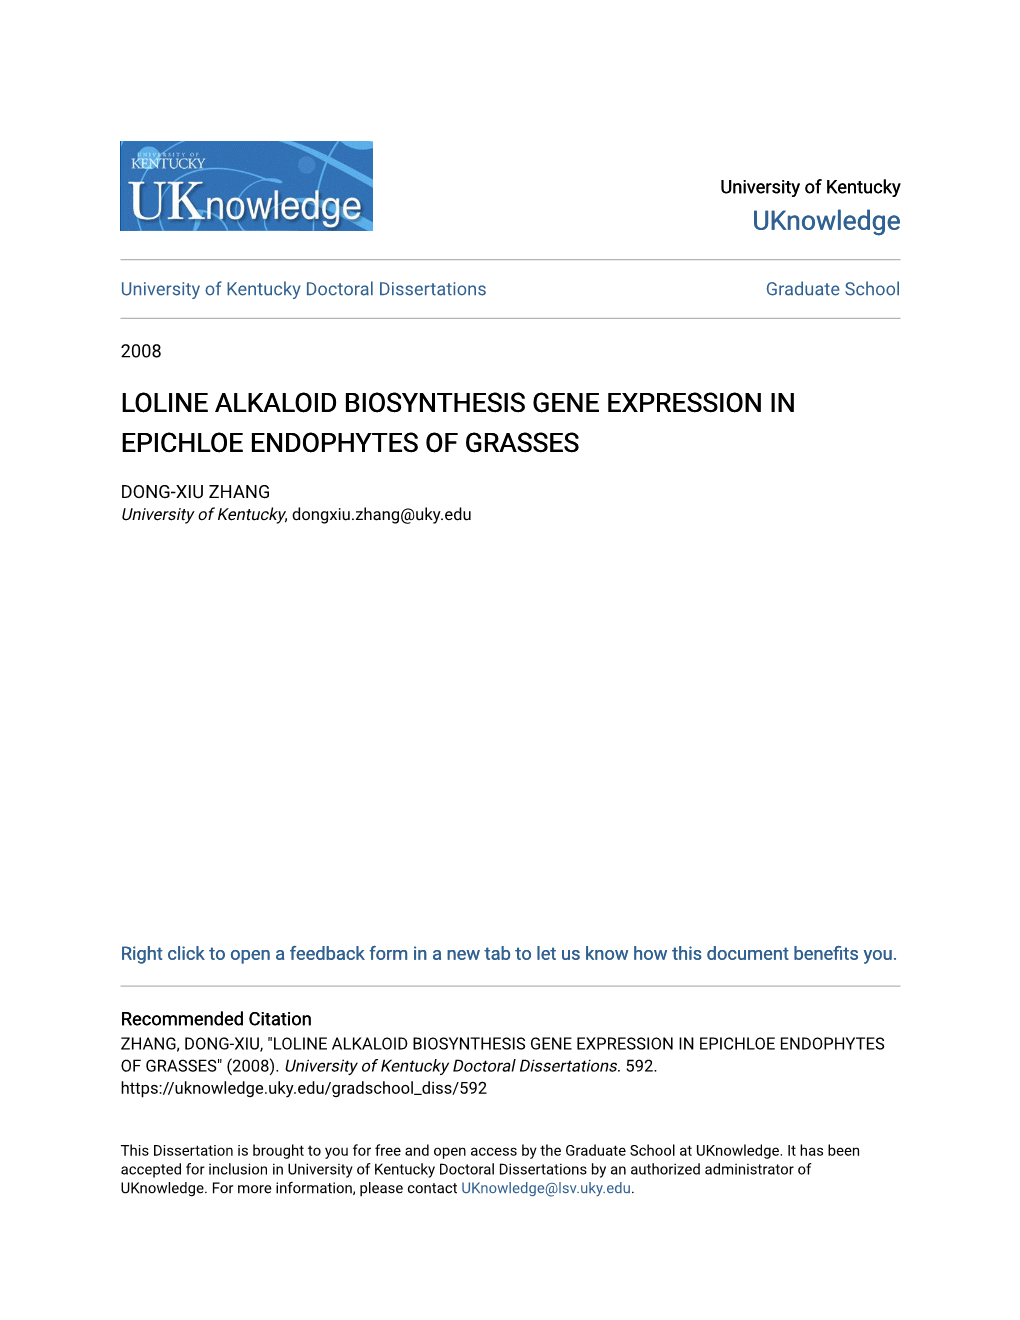 Loline Alkaloid Biosynthesis Gene Expression in Epichloe Endophytes of Grasses